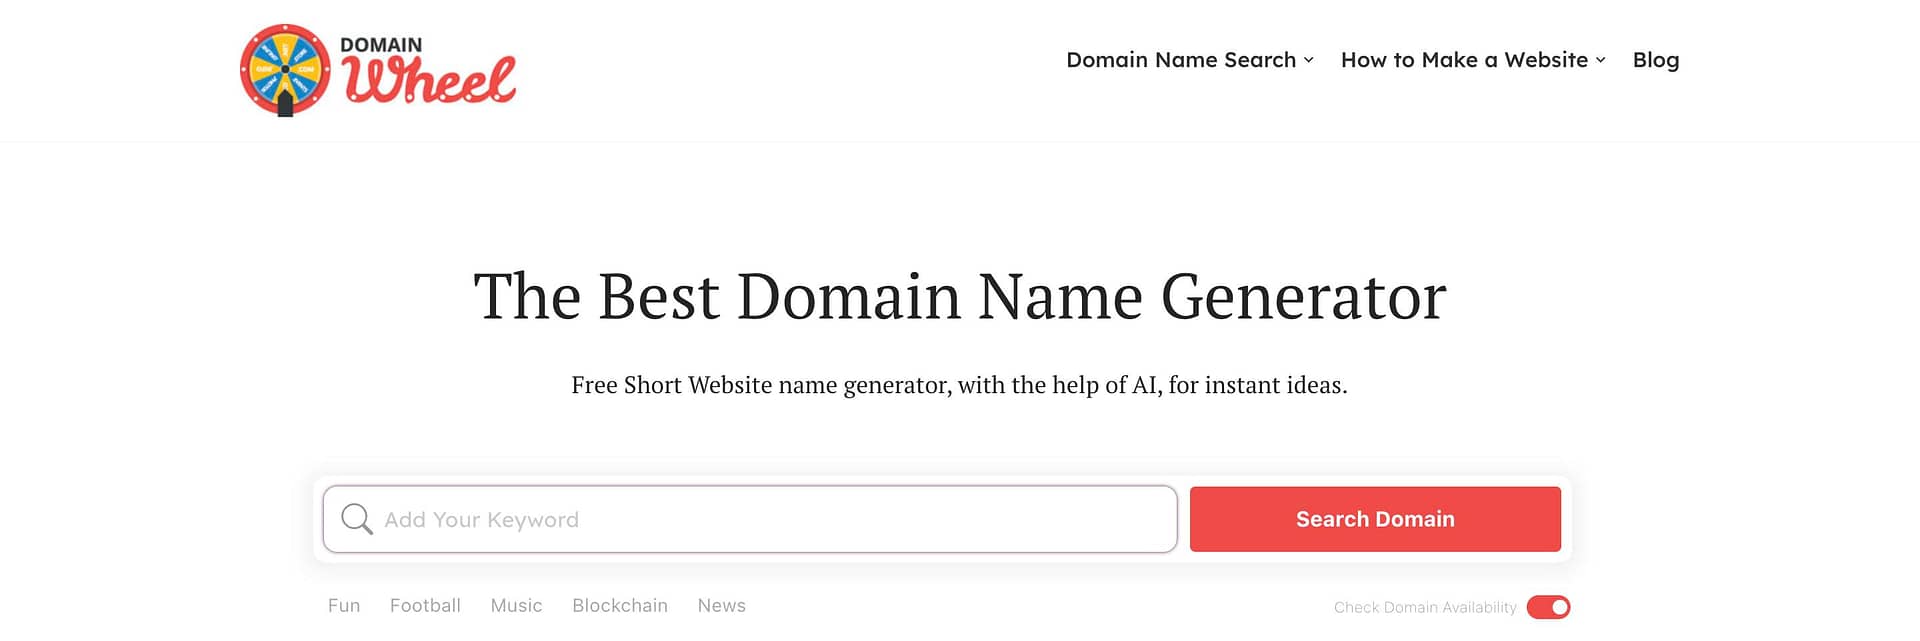 Use the DomainWheel generator